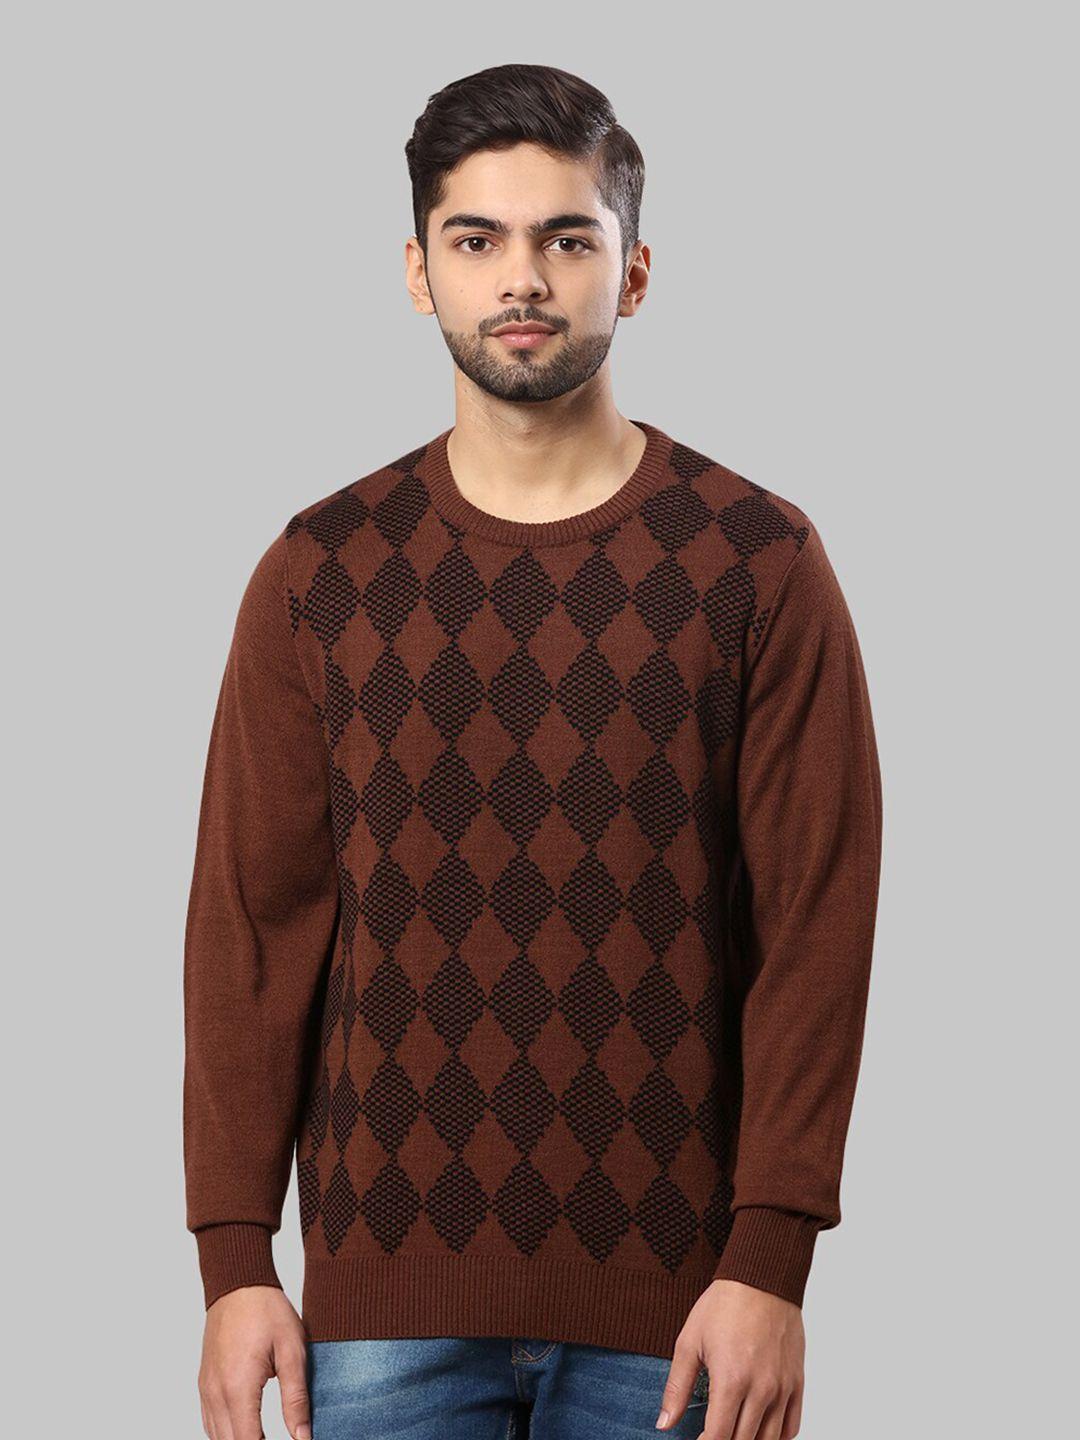 raymond-men-brown-&-black-checked-sweater